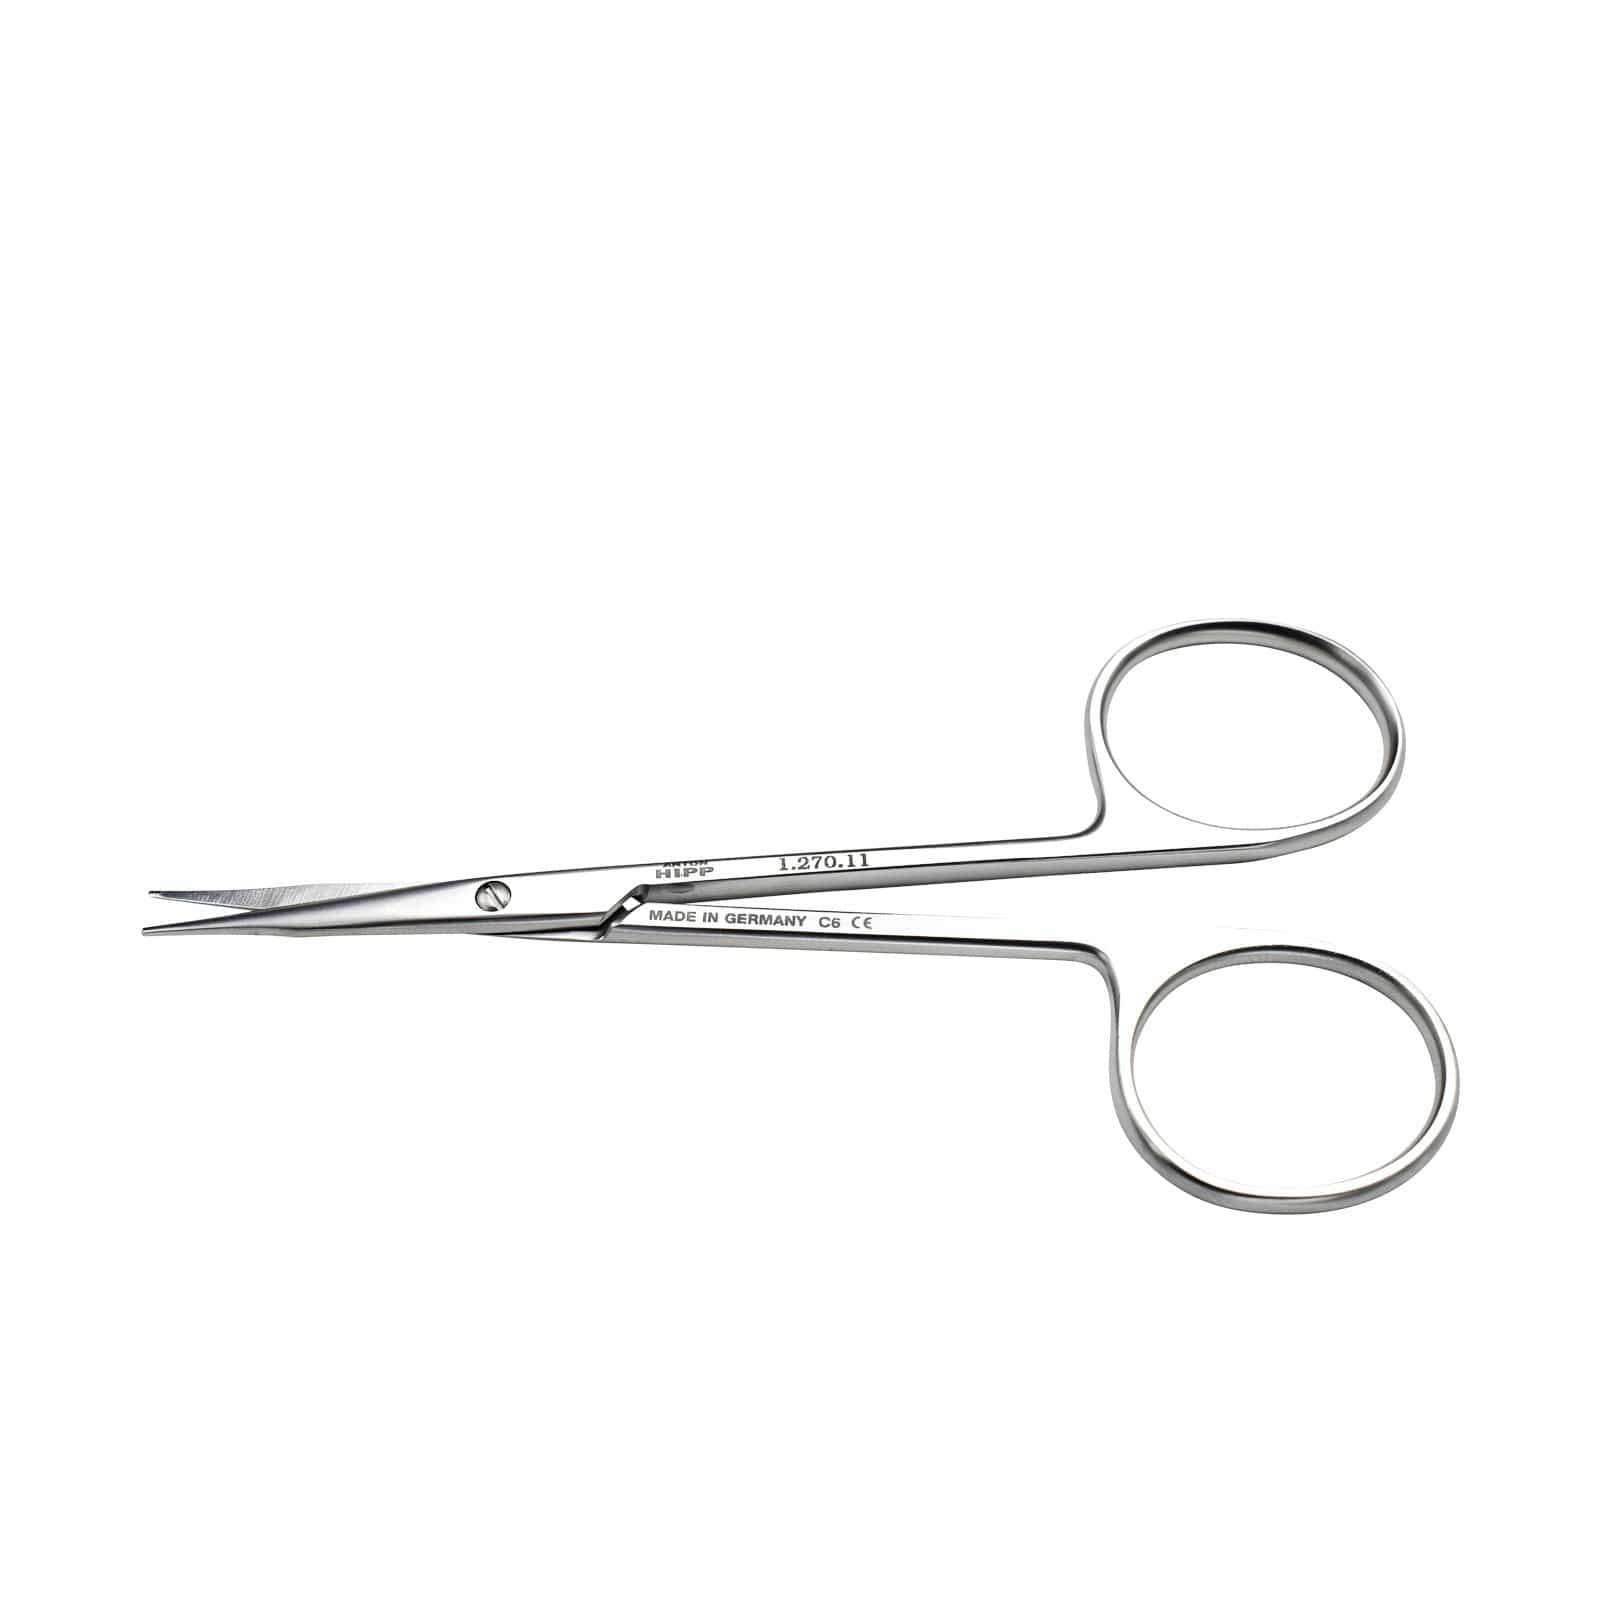 Hipp Surgical Instruments 11cm / Straight / Standard Hipp Stevens Tenotomy Scissors